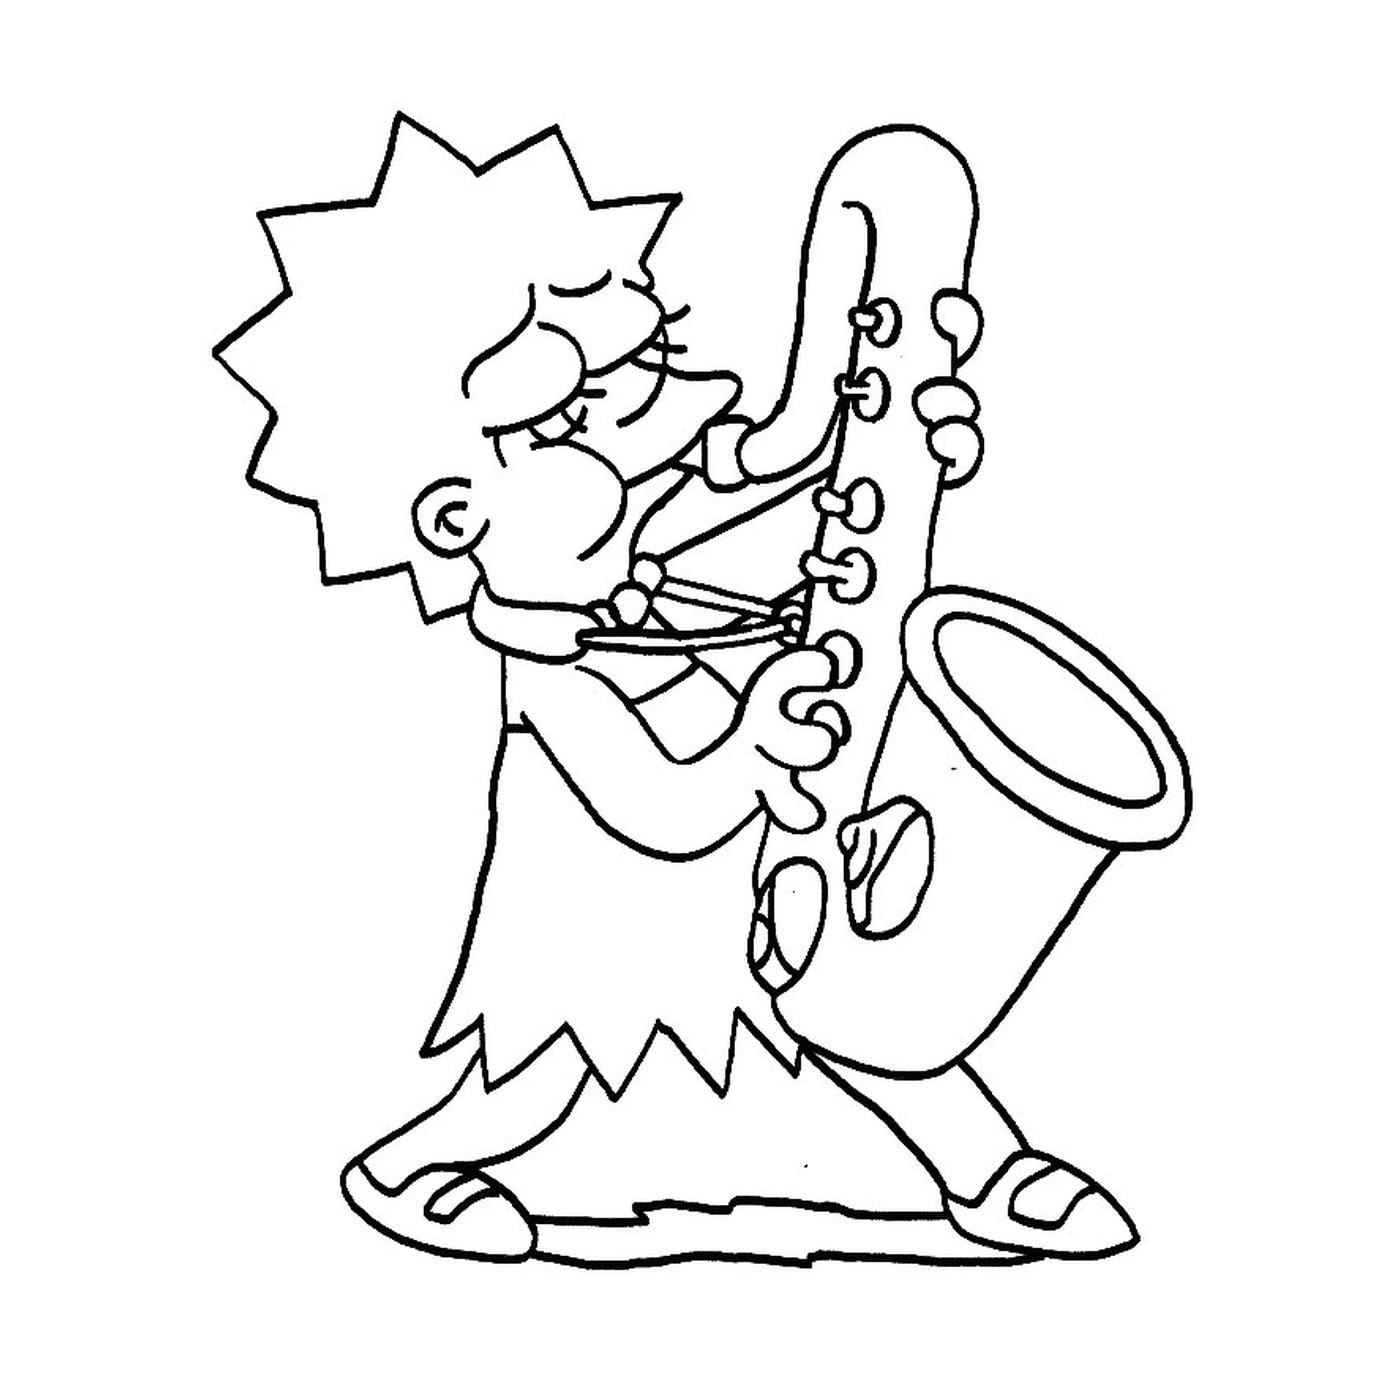  Lisa Simpson plays the saxophone 